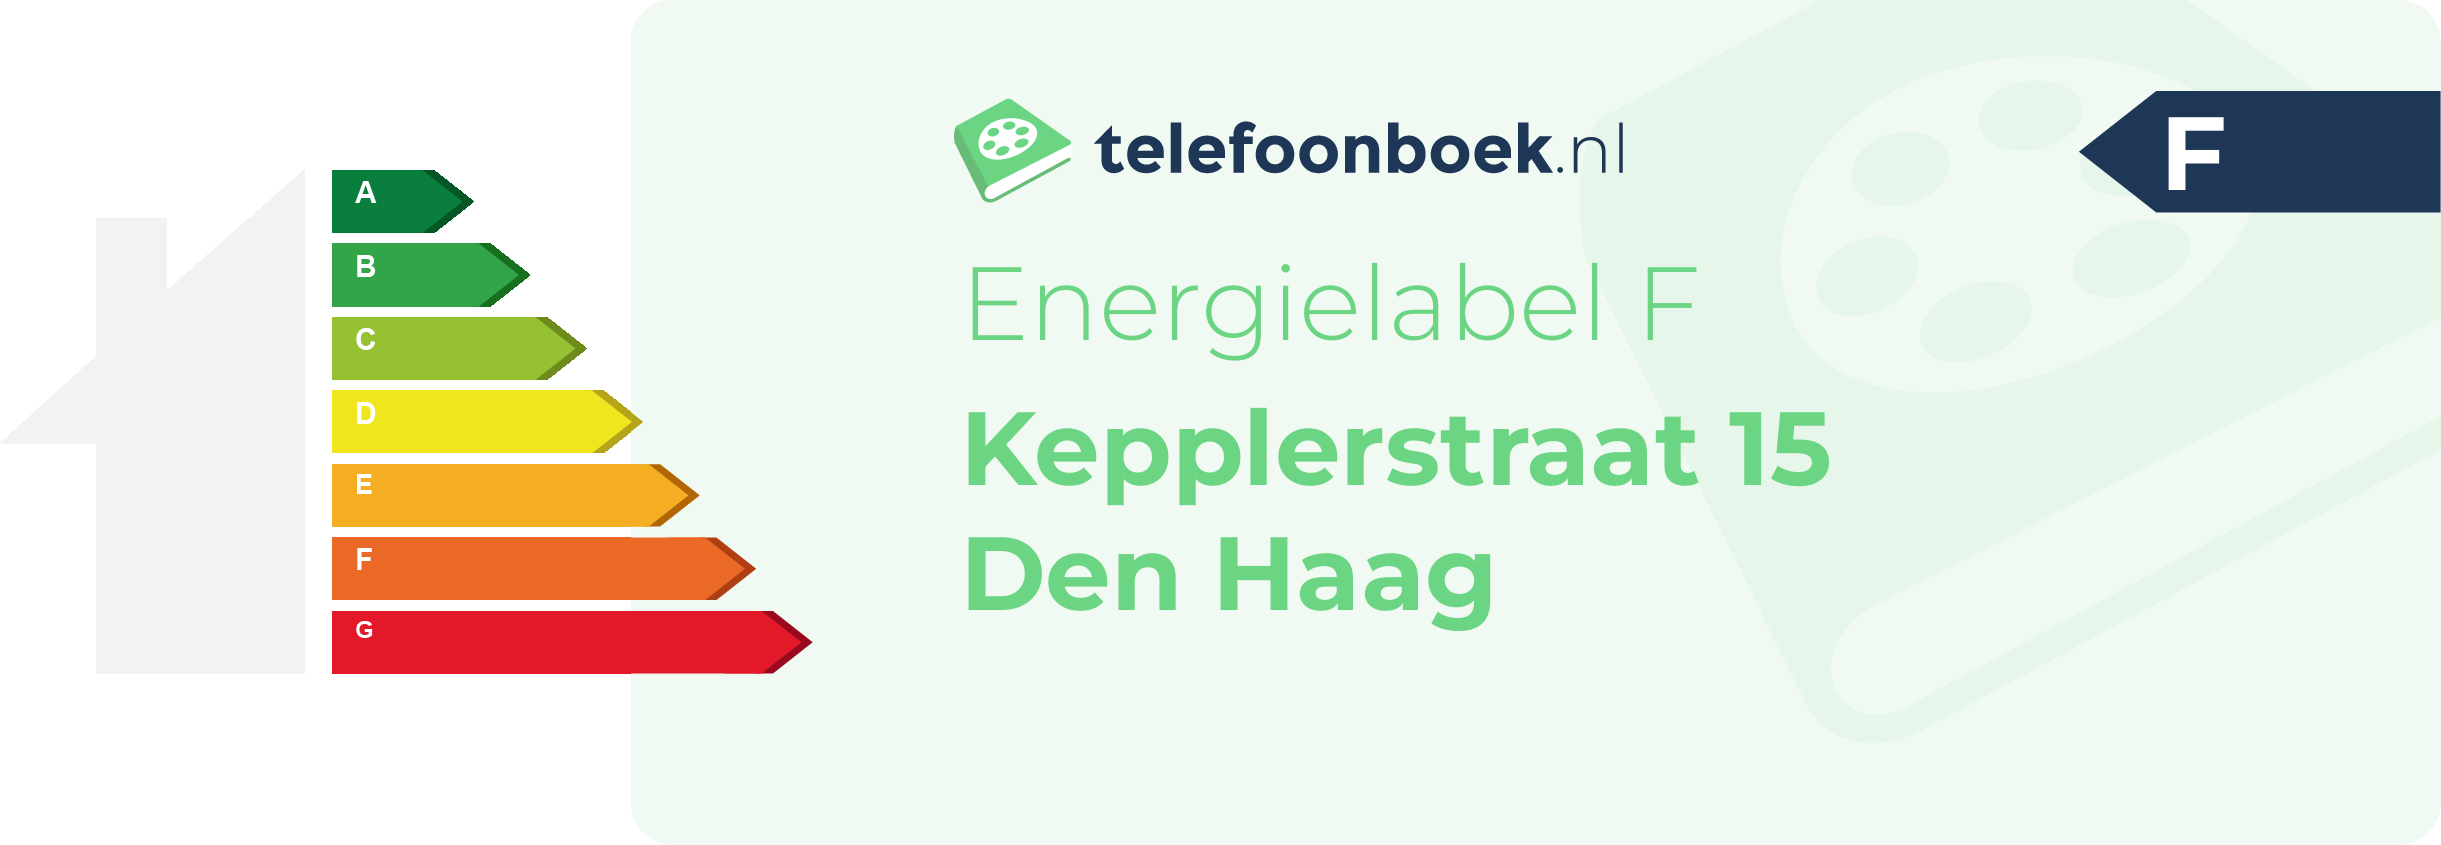 Energielabel Kepplerstraat 15 Den Haag